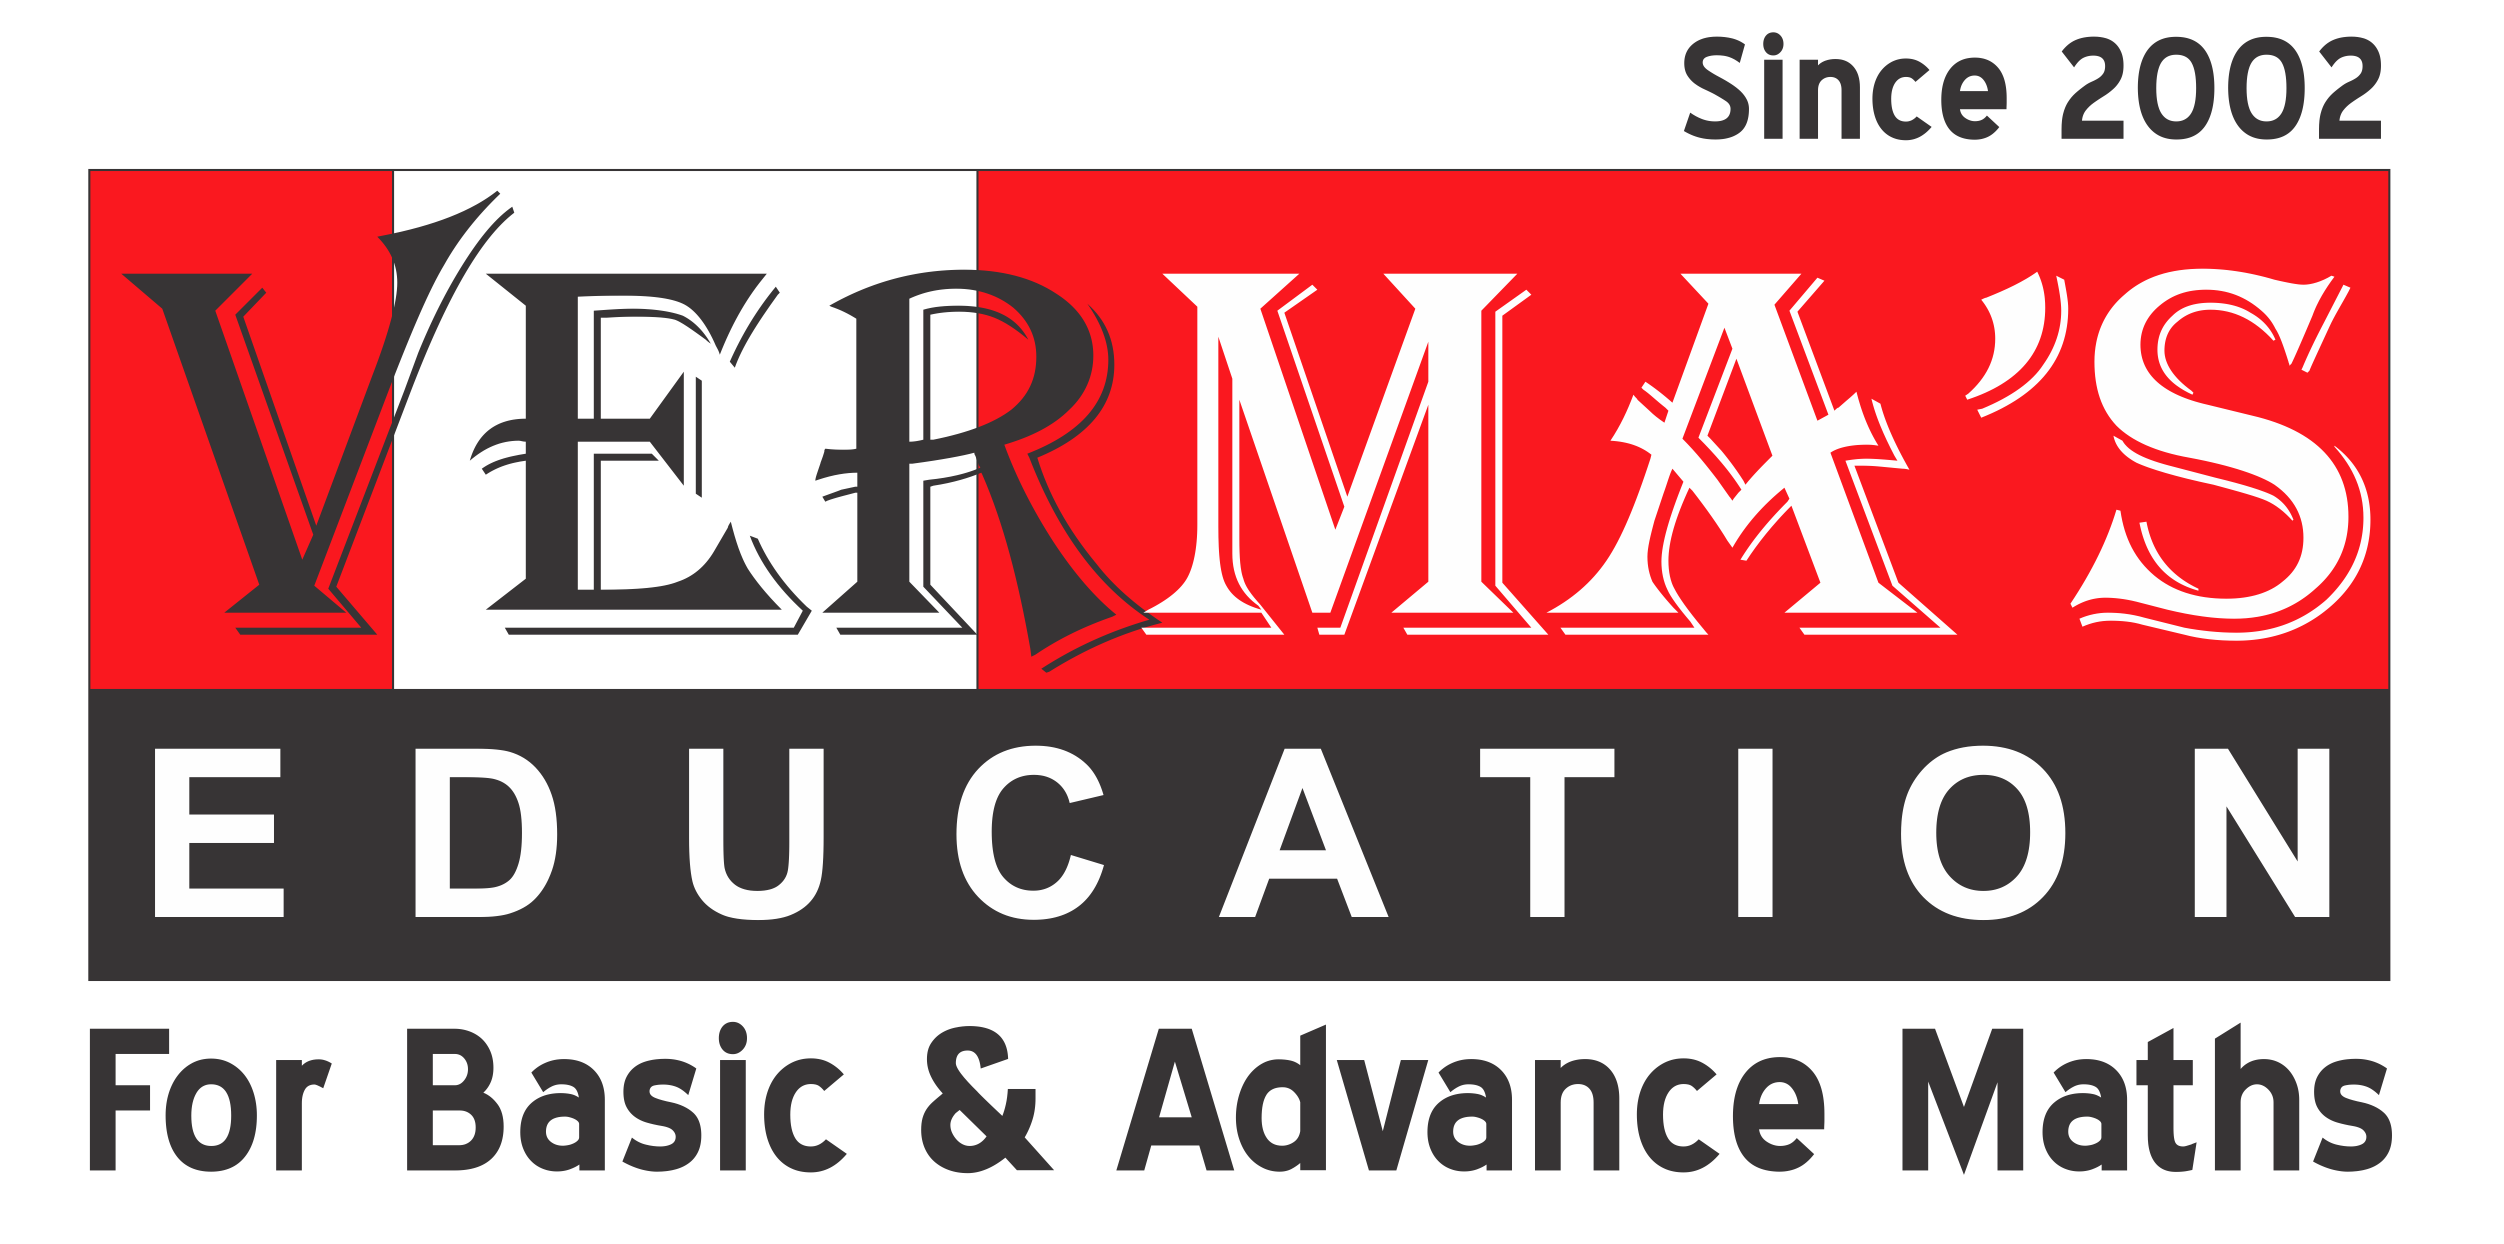 verma education logo